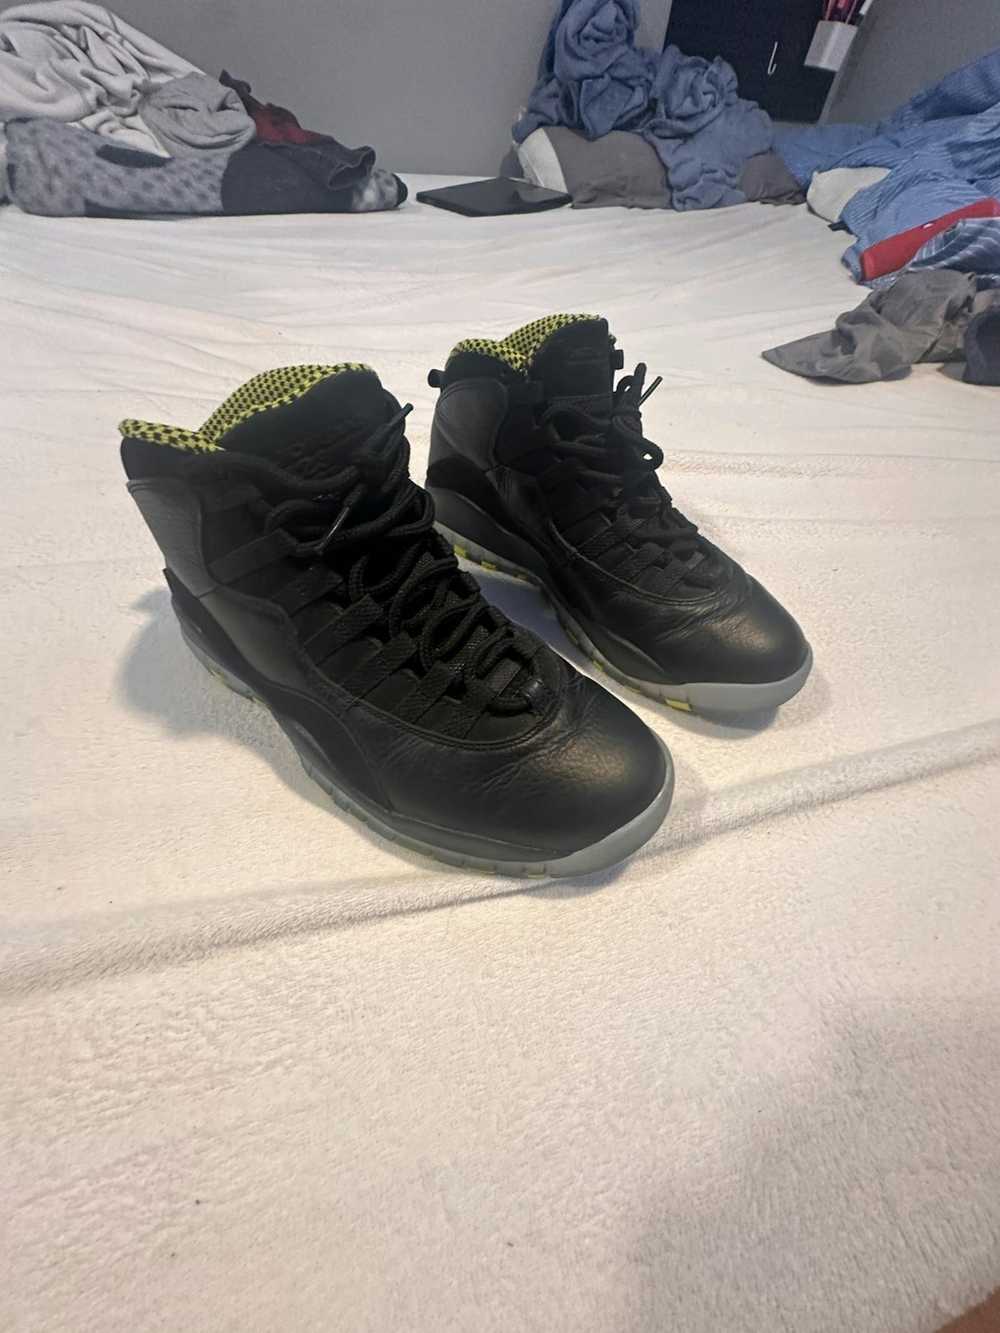 Jordan Brand × Nike Jordan retro 10 venoms - image 8